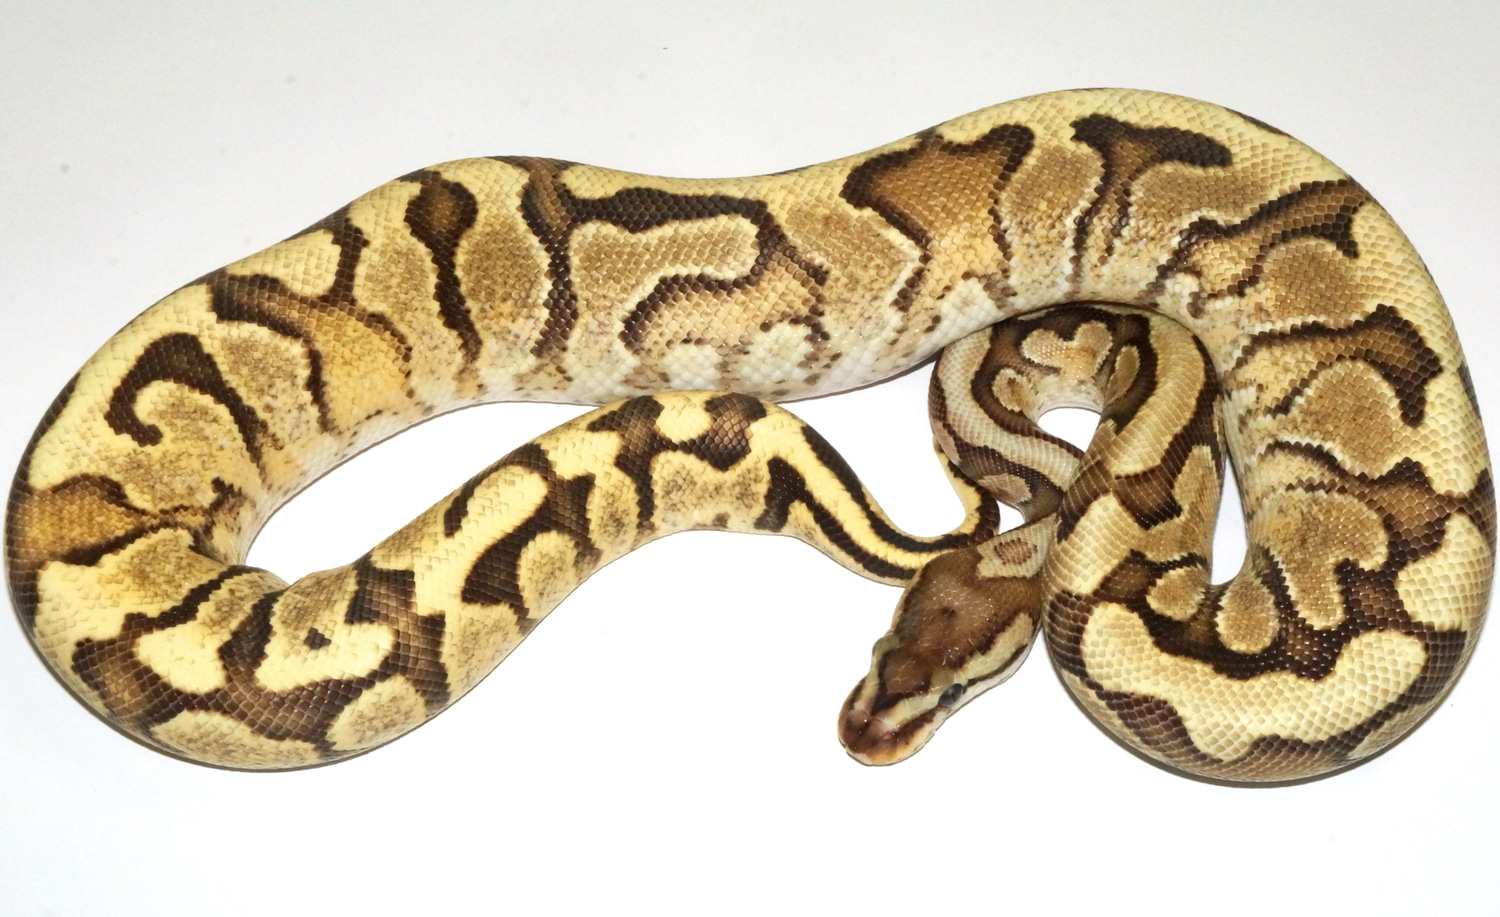 Hidden Gene Woma Mephisto Ball Python by New England Reptile Distributors